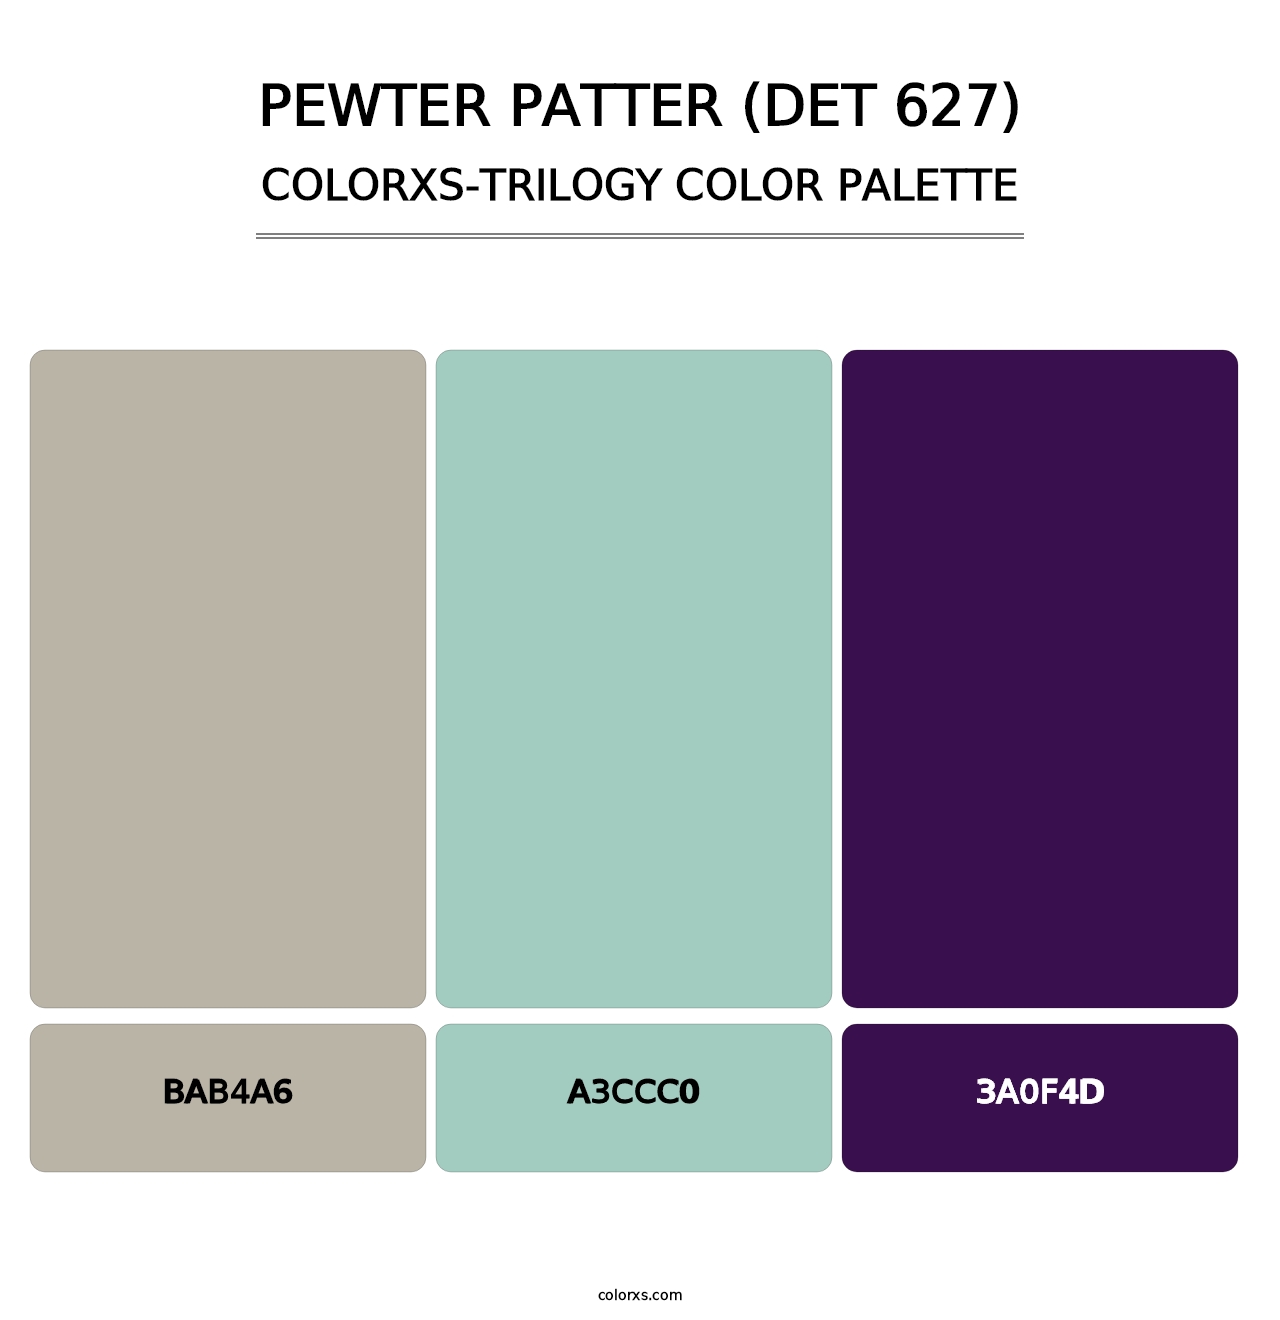 Pewter Patter (DET 627) - Colorxs Trilogy Palette